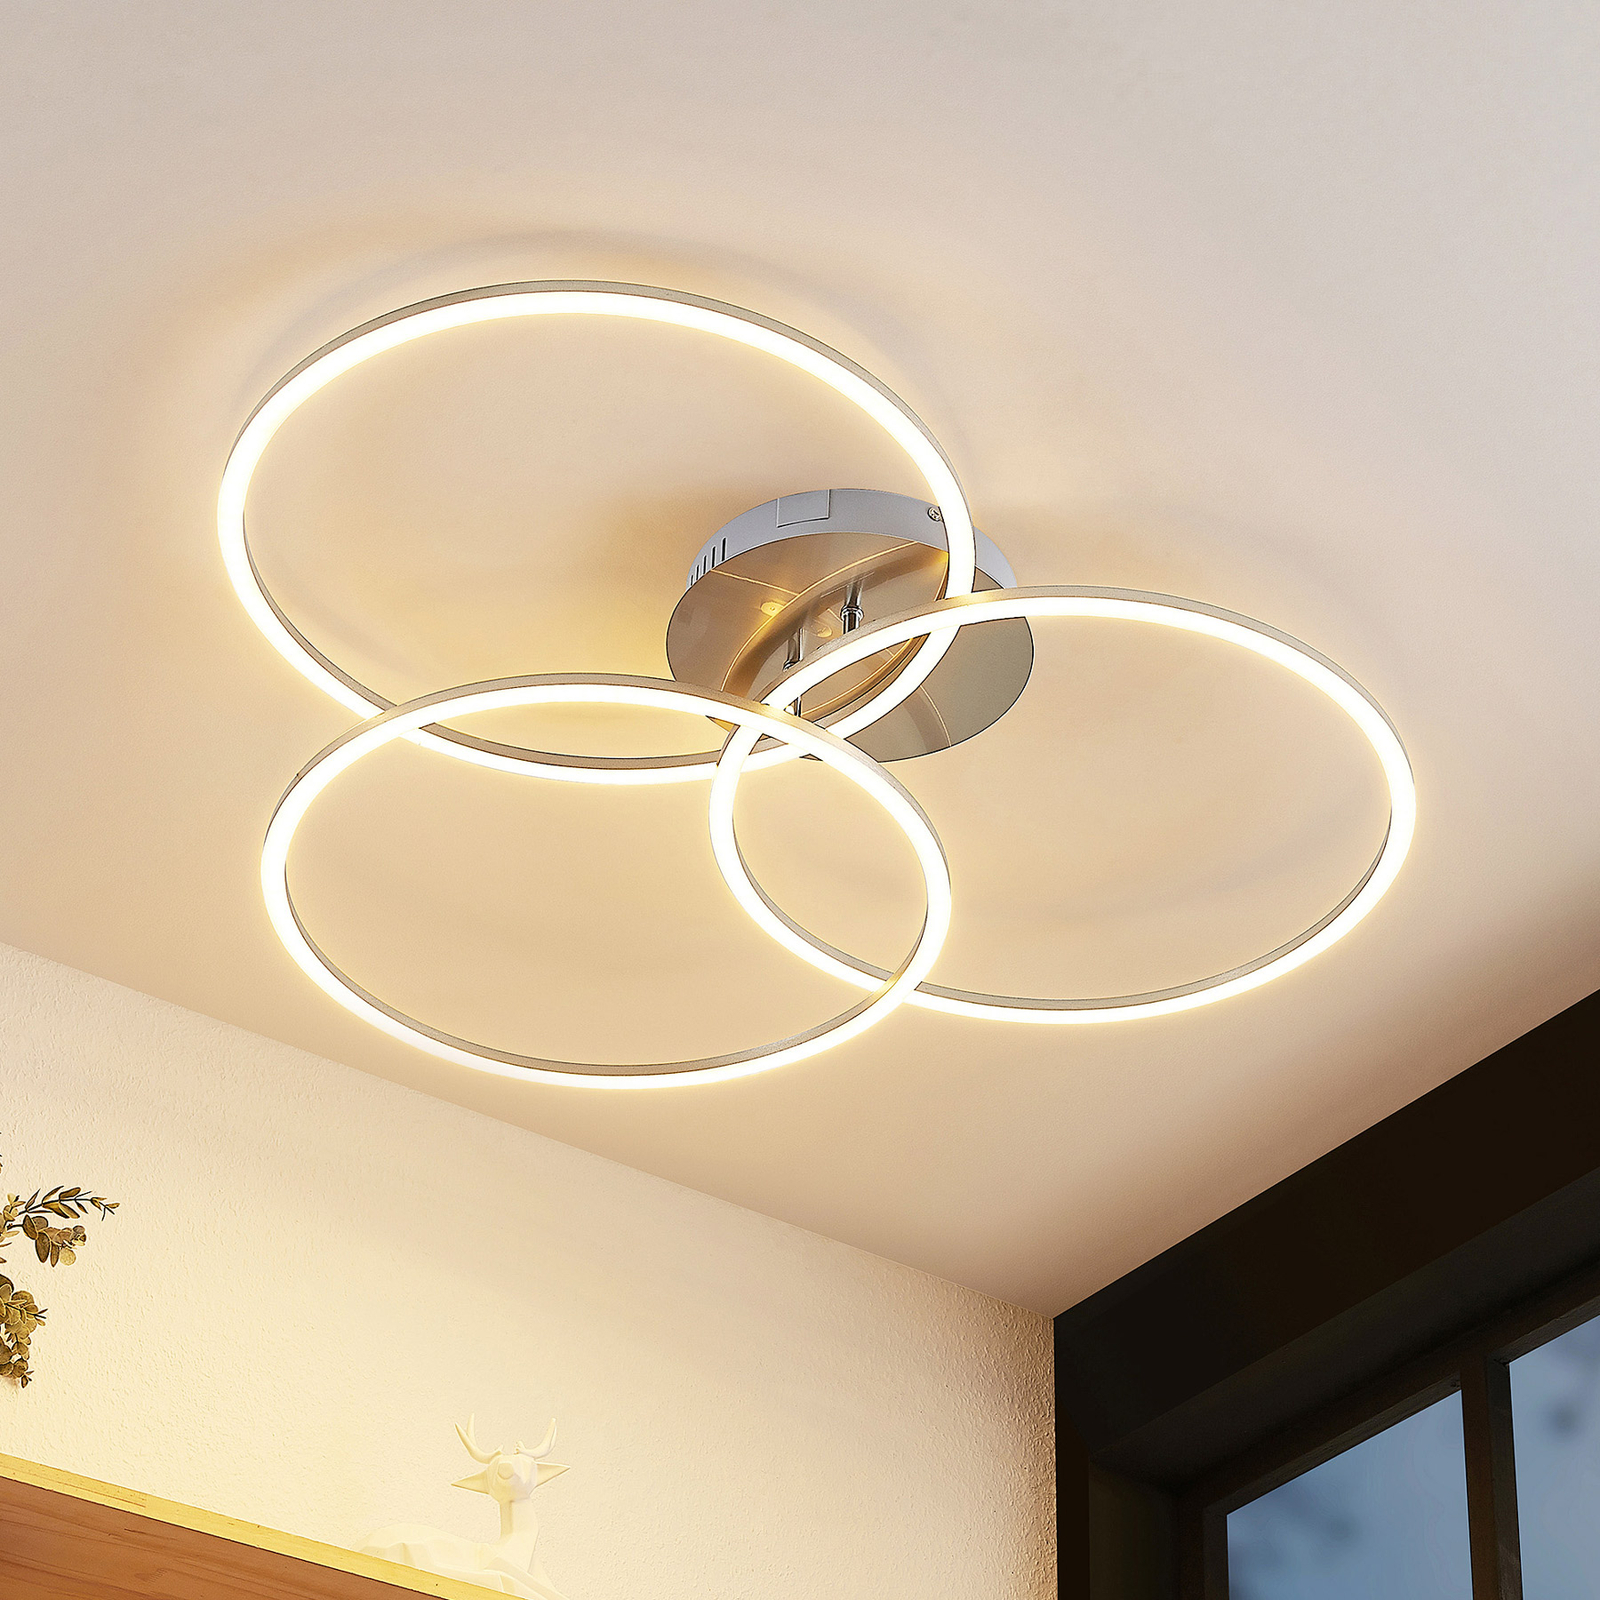 Lucande Lucardis LED-Deckenlampe, 3-flammig, rund